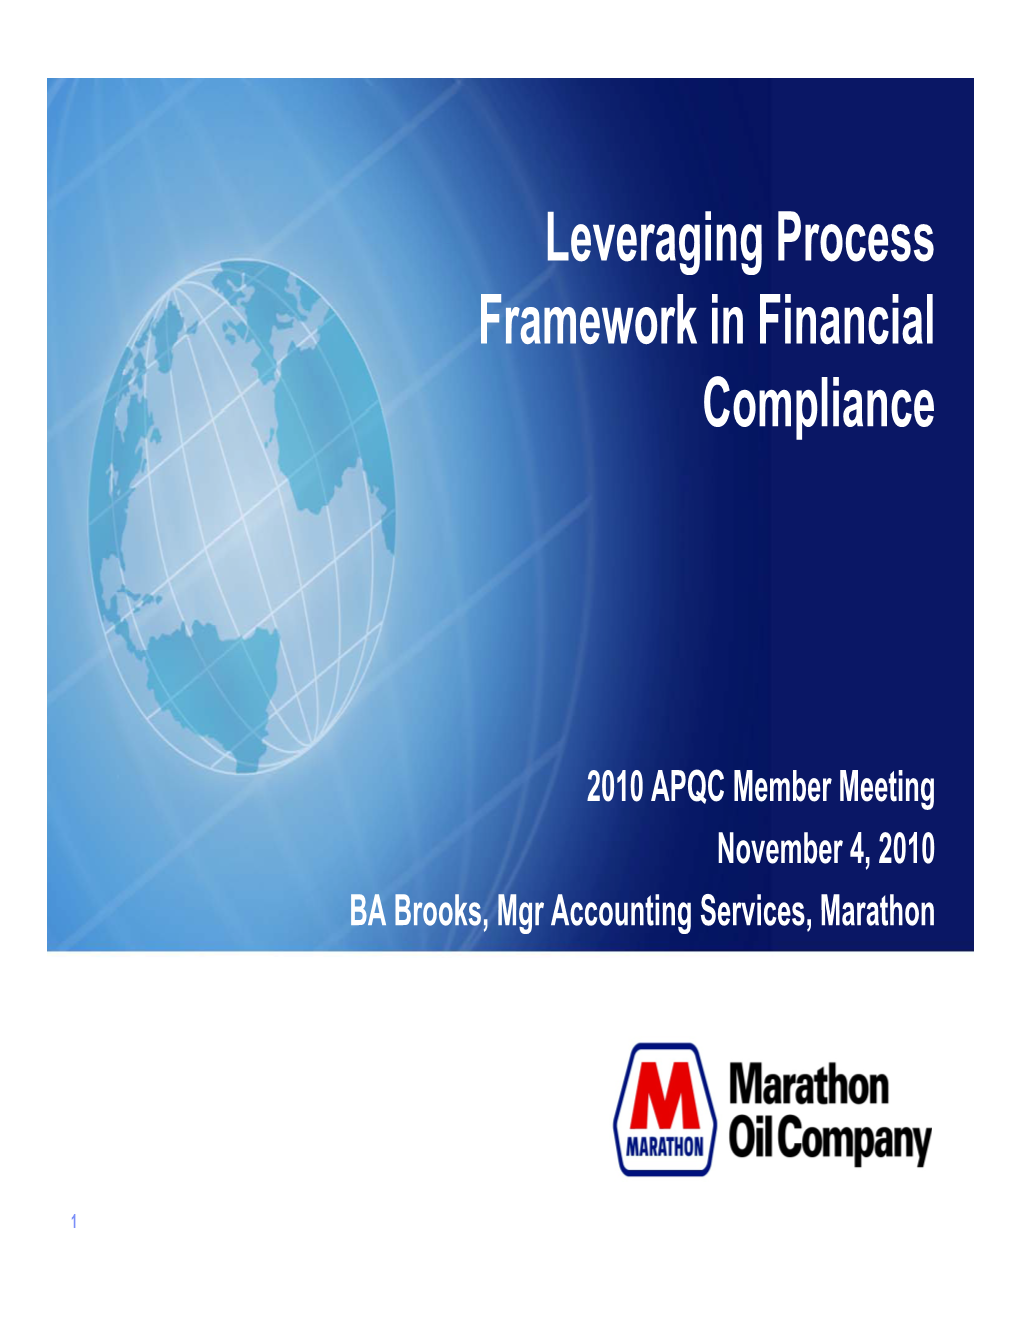 Process Framework in Financial Compliance